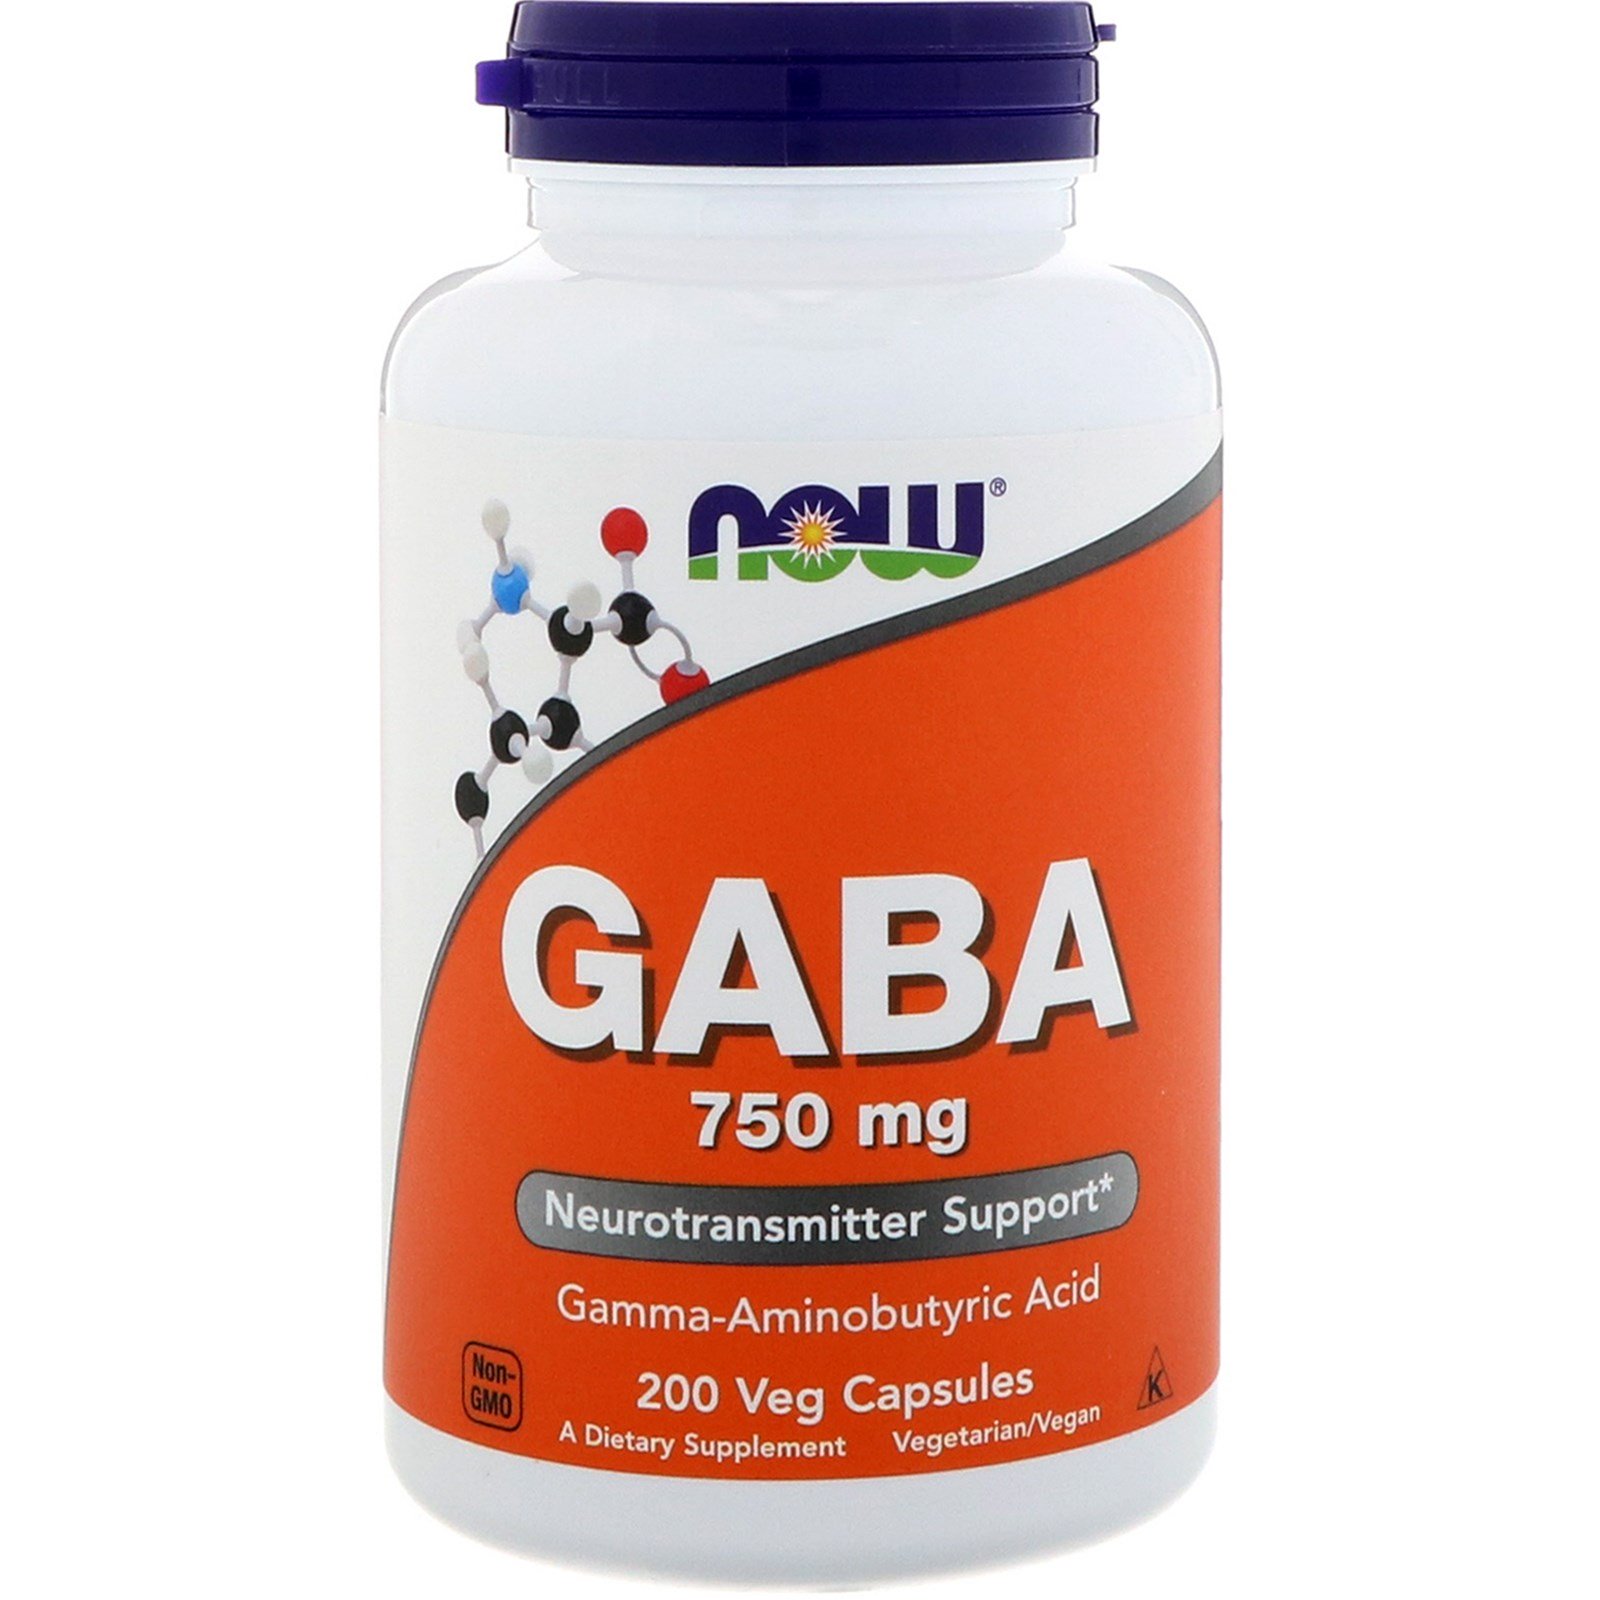 NOW GABA, ГАБА Гамма-Аминомасляная Кислота (ГАМК) 750 мг - 200 капсул